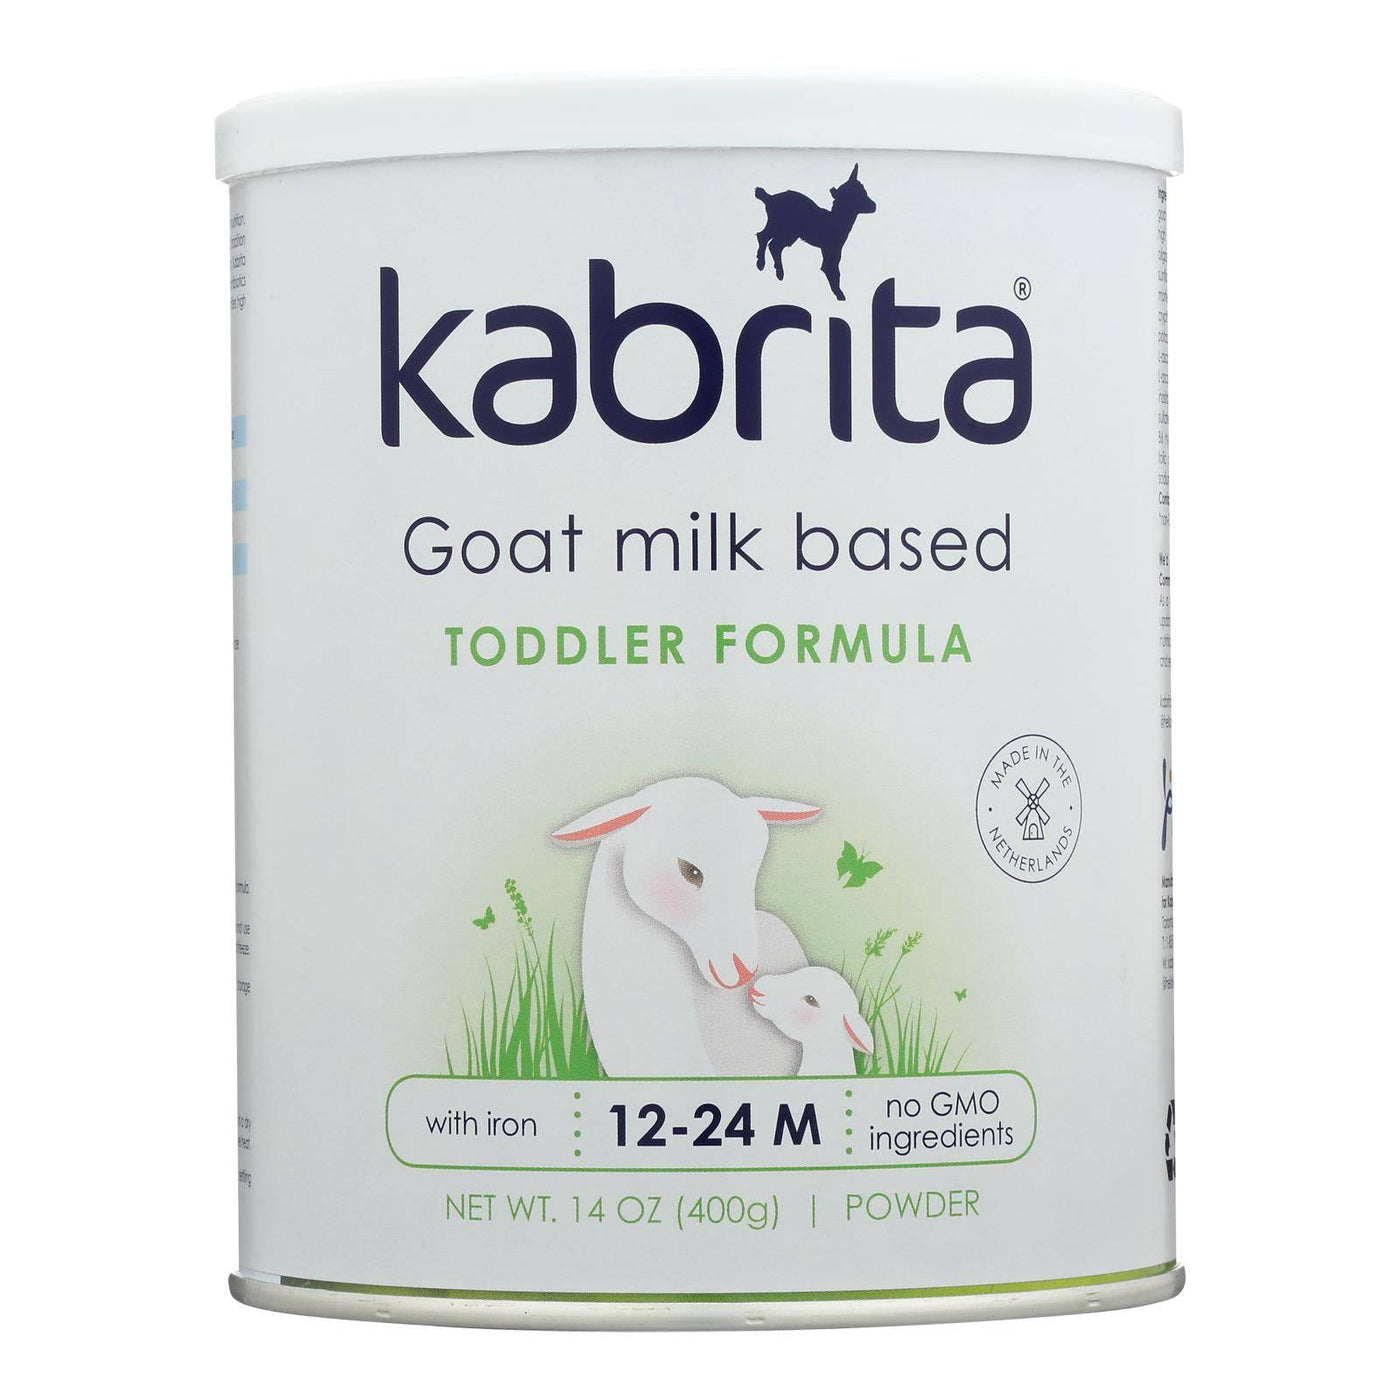 Buy Kabrita Toddler Formula - Goat Milk - Powder - 14 Oz - Case Of 12  at OnlyNaturals.us